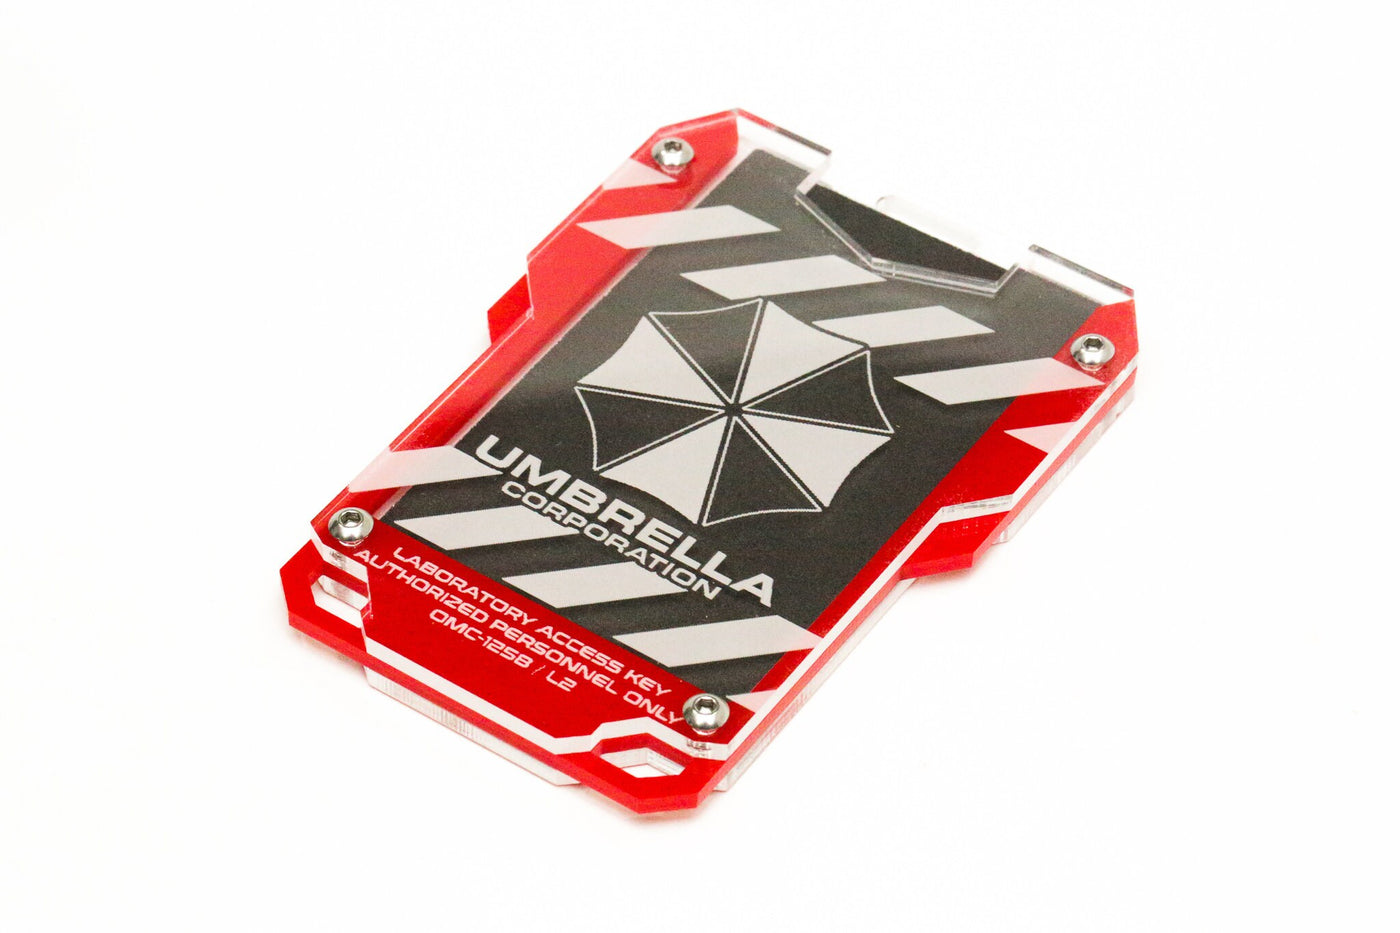 Umbrella Corp Cyberpunk keycard style card ID holder - Jones Creativity